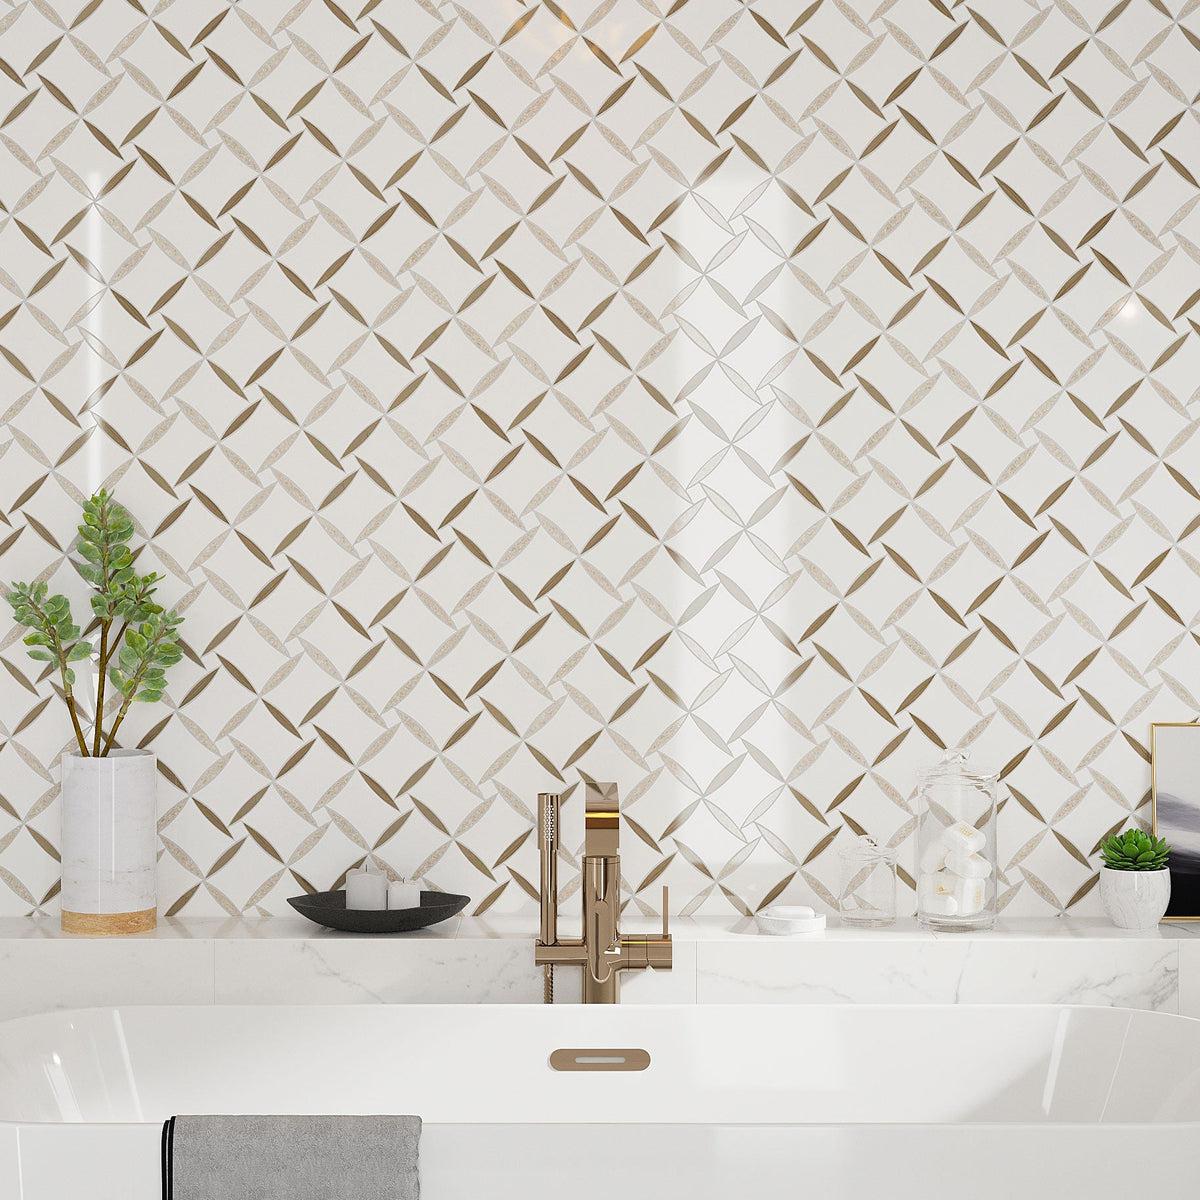 Glamorous white marble bathroom wall with soaking tub